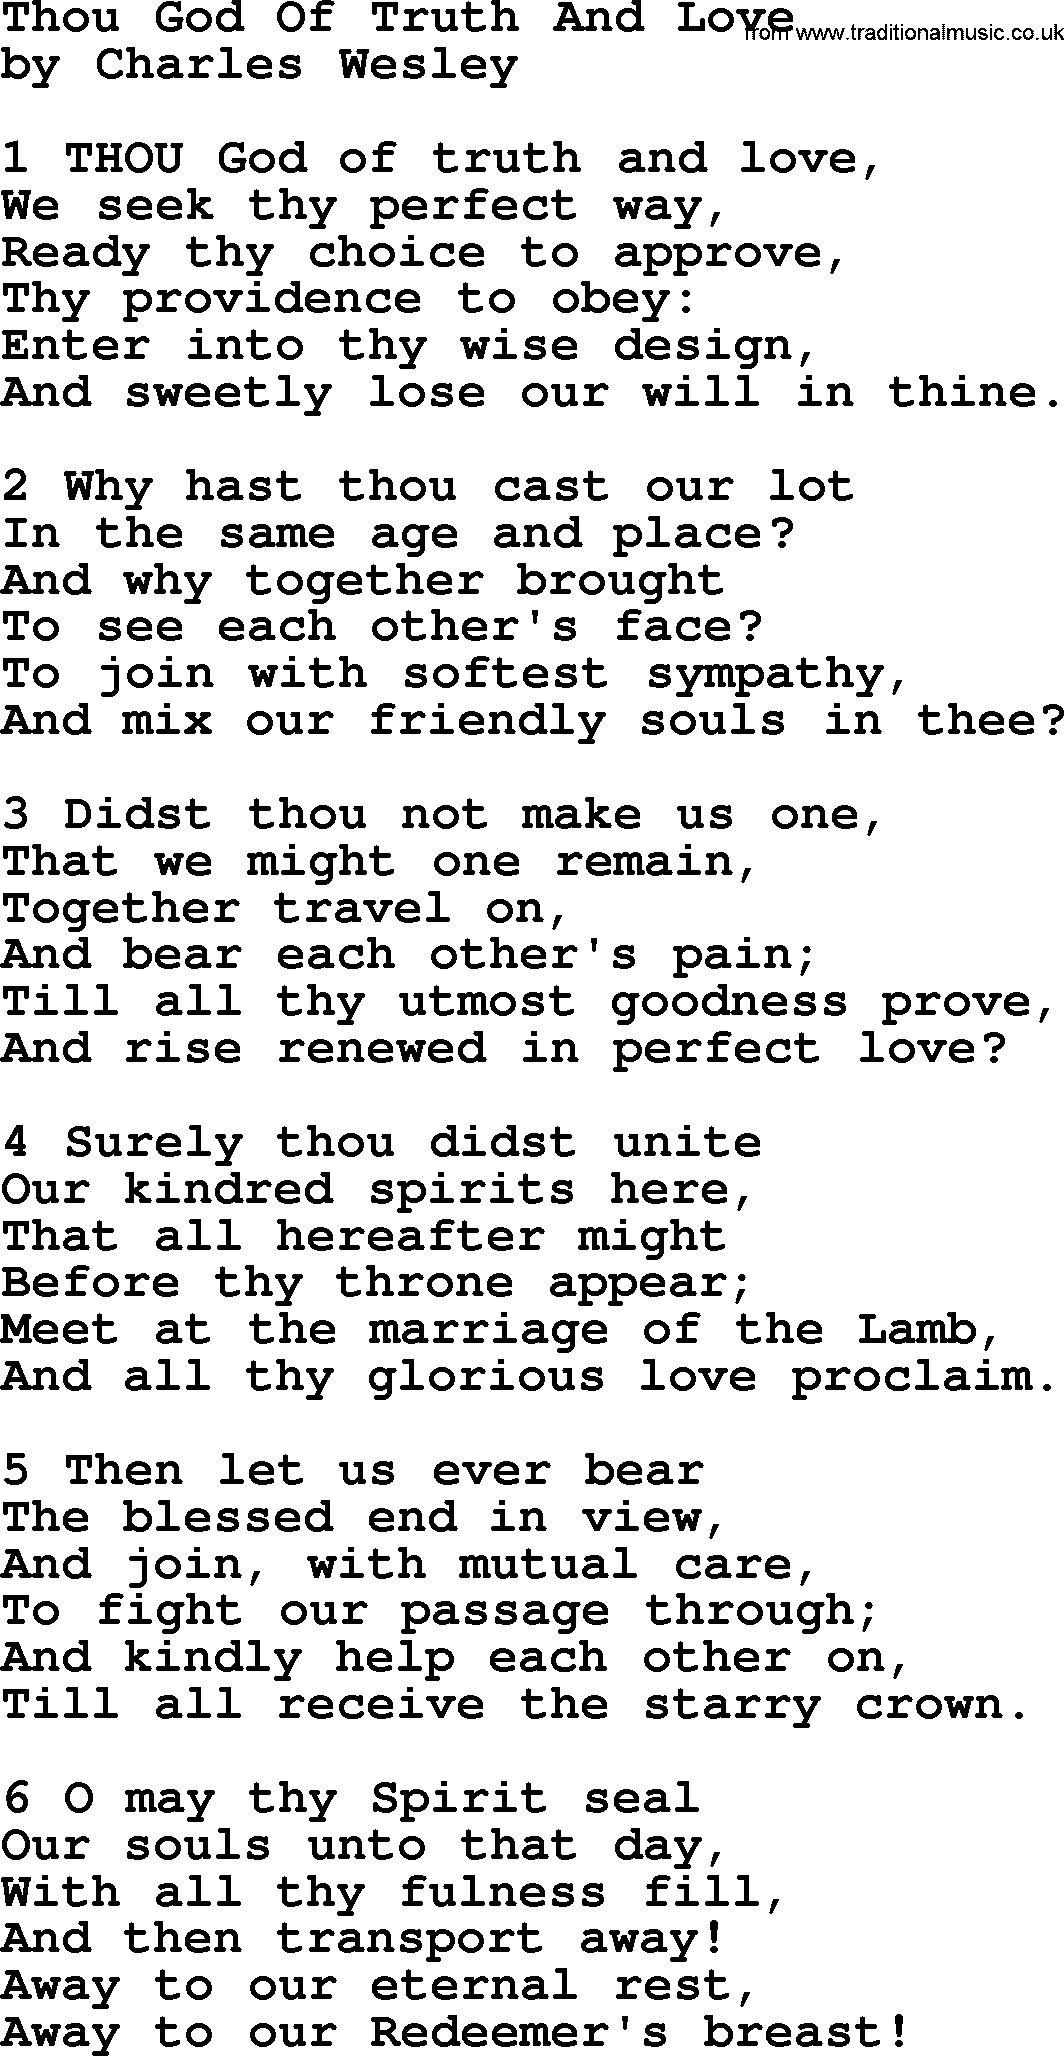 Charles Wesley hymn: Thou God Of Truth And Love, lyrics